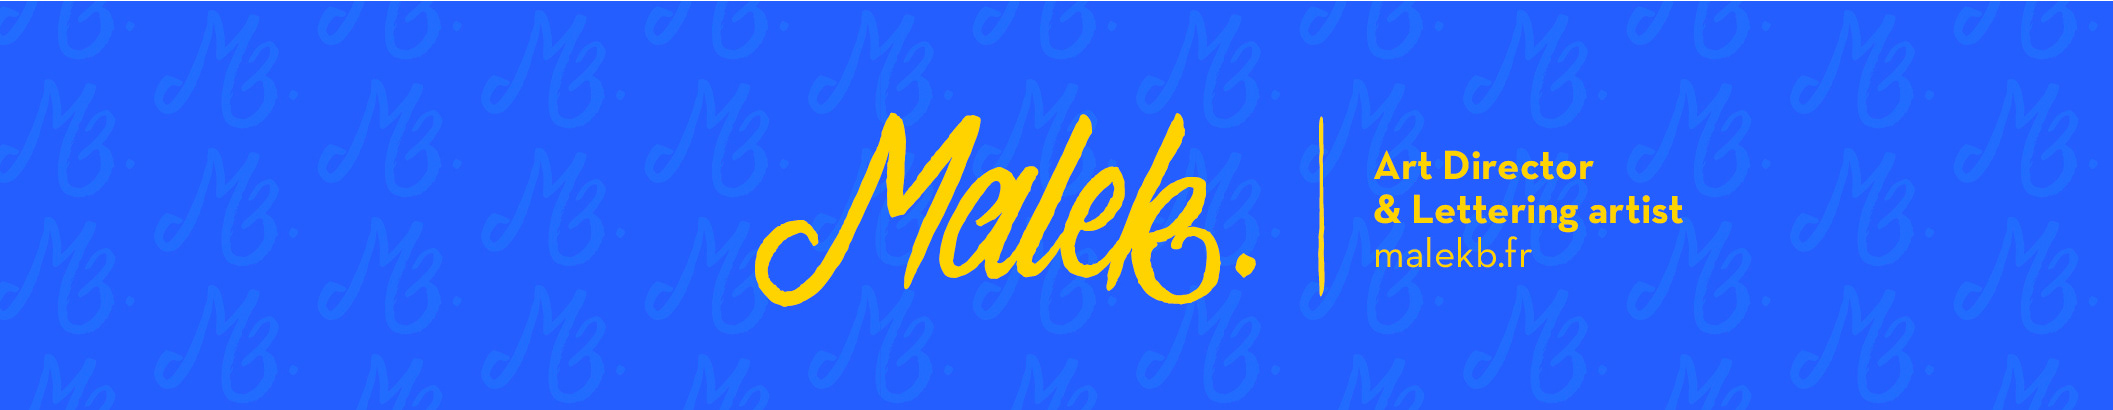 Banner de perfil de Malek B.